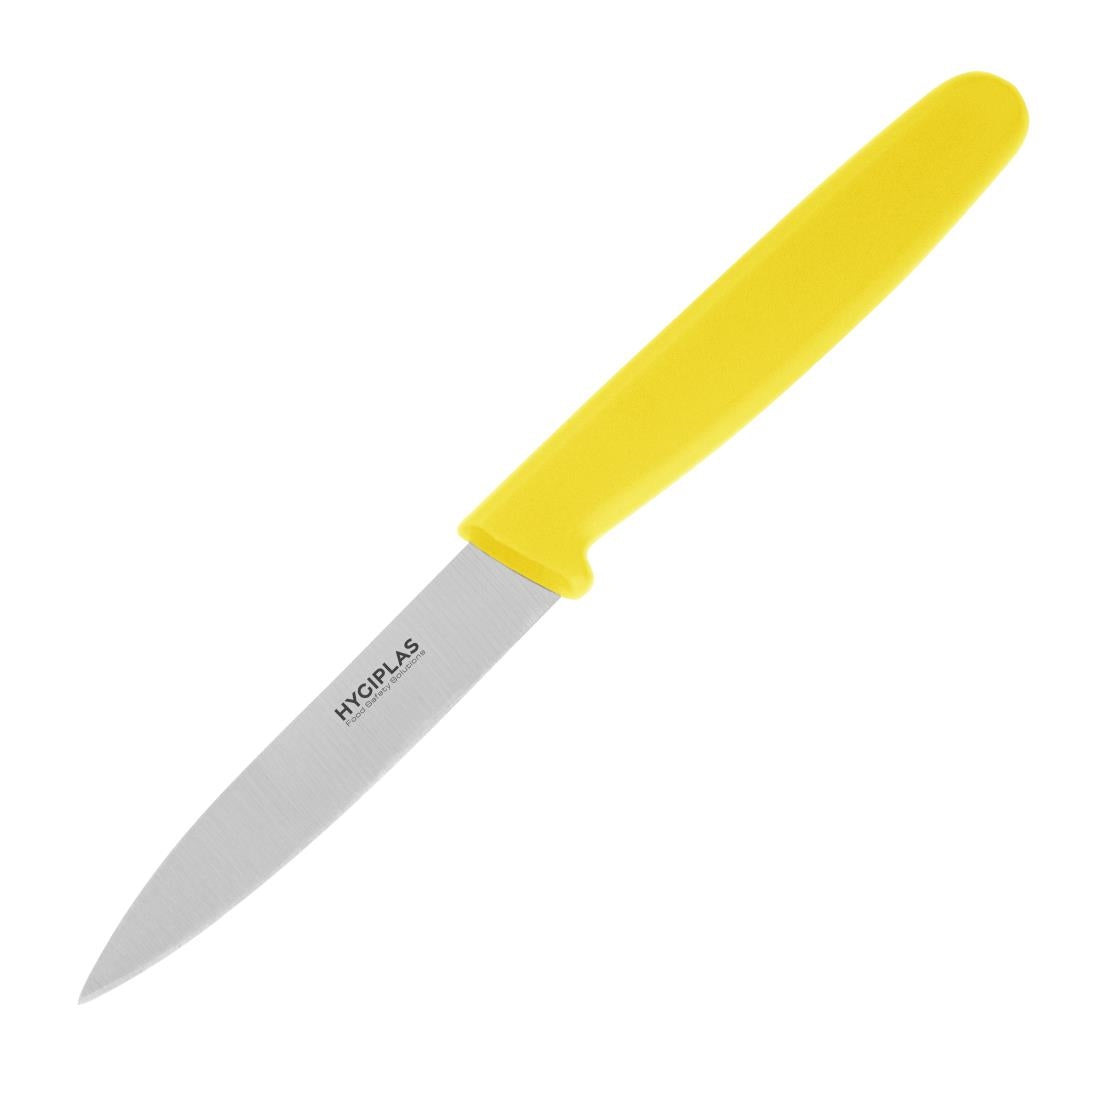 FX124 Hygiplas Paring Knife Yellow 7.6cm JD Catering Equipment Solutions Ltd